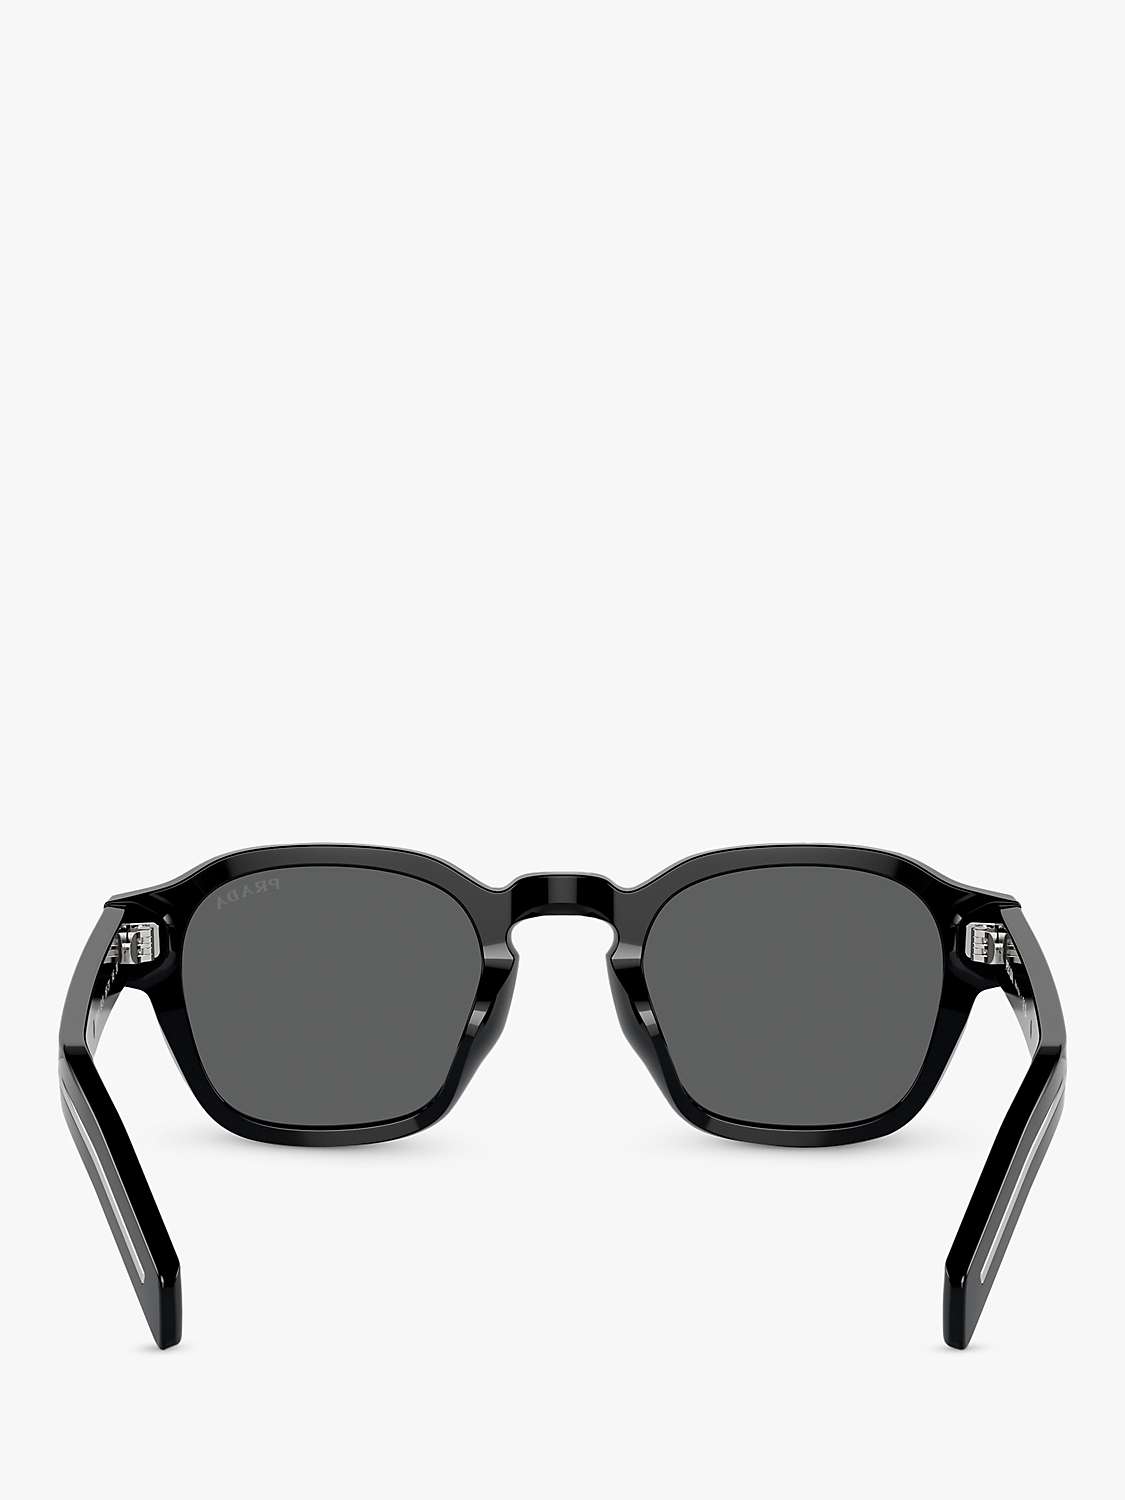 Buy Prada PR A16S Men's D-Frame Sunglasses, Black/Grey Online at johnlewis.com